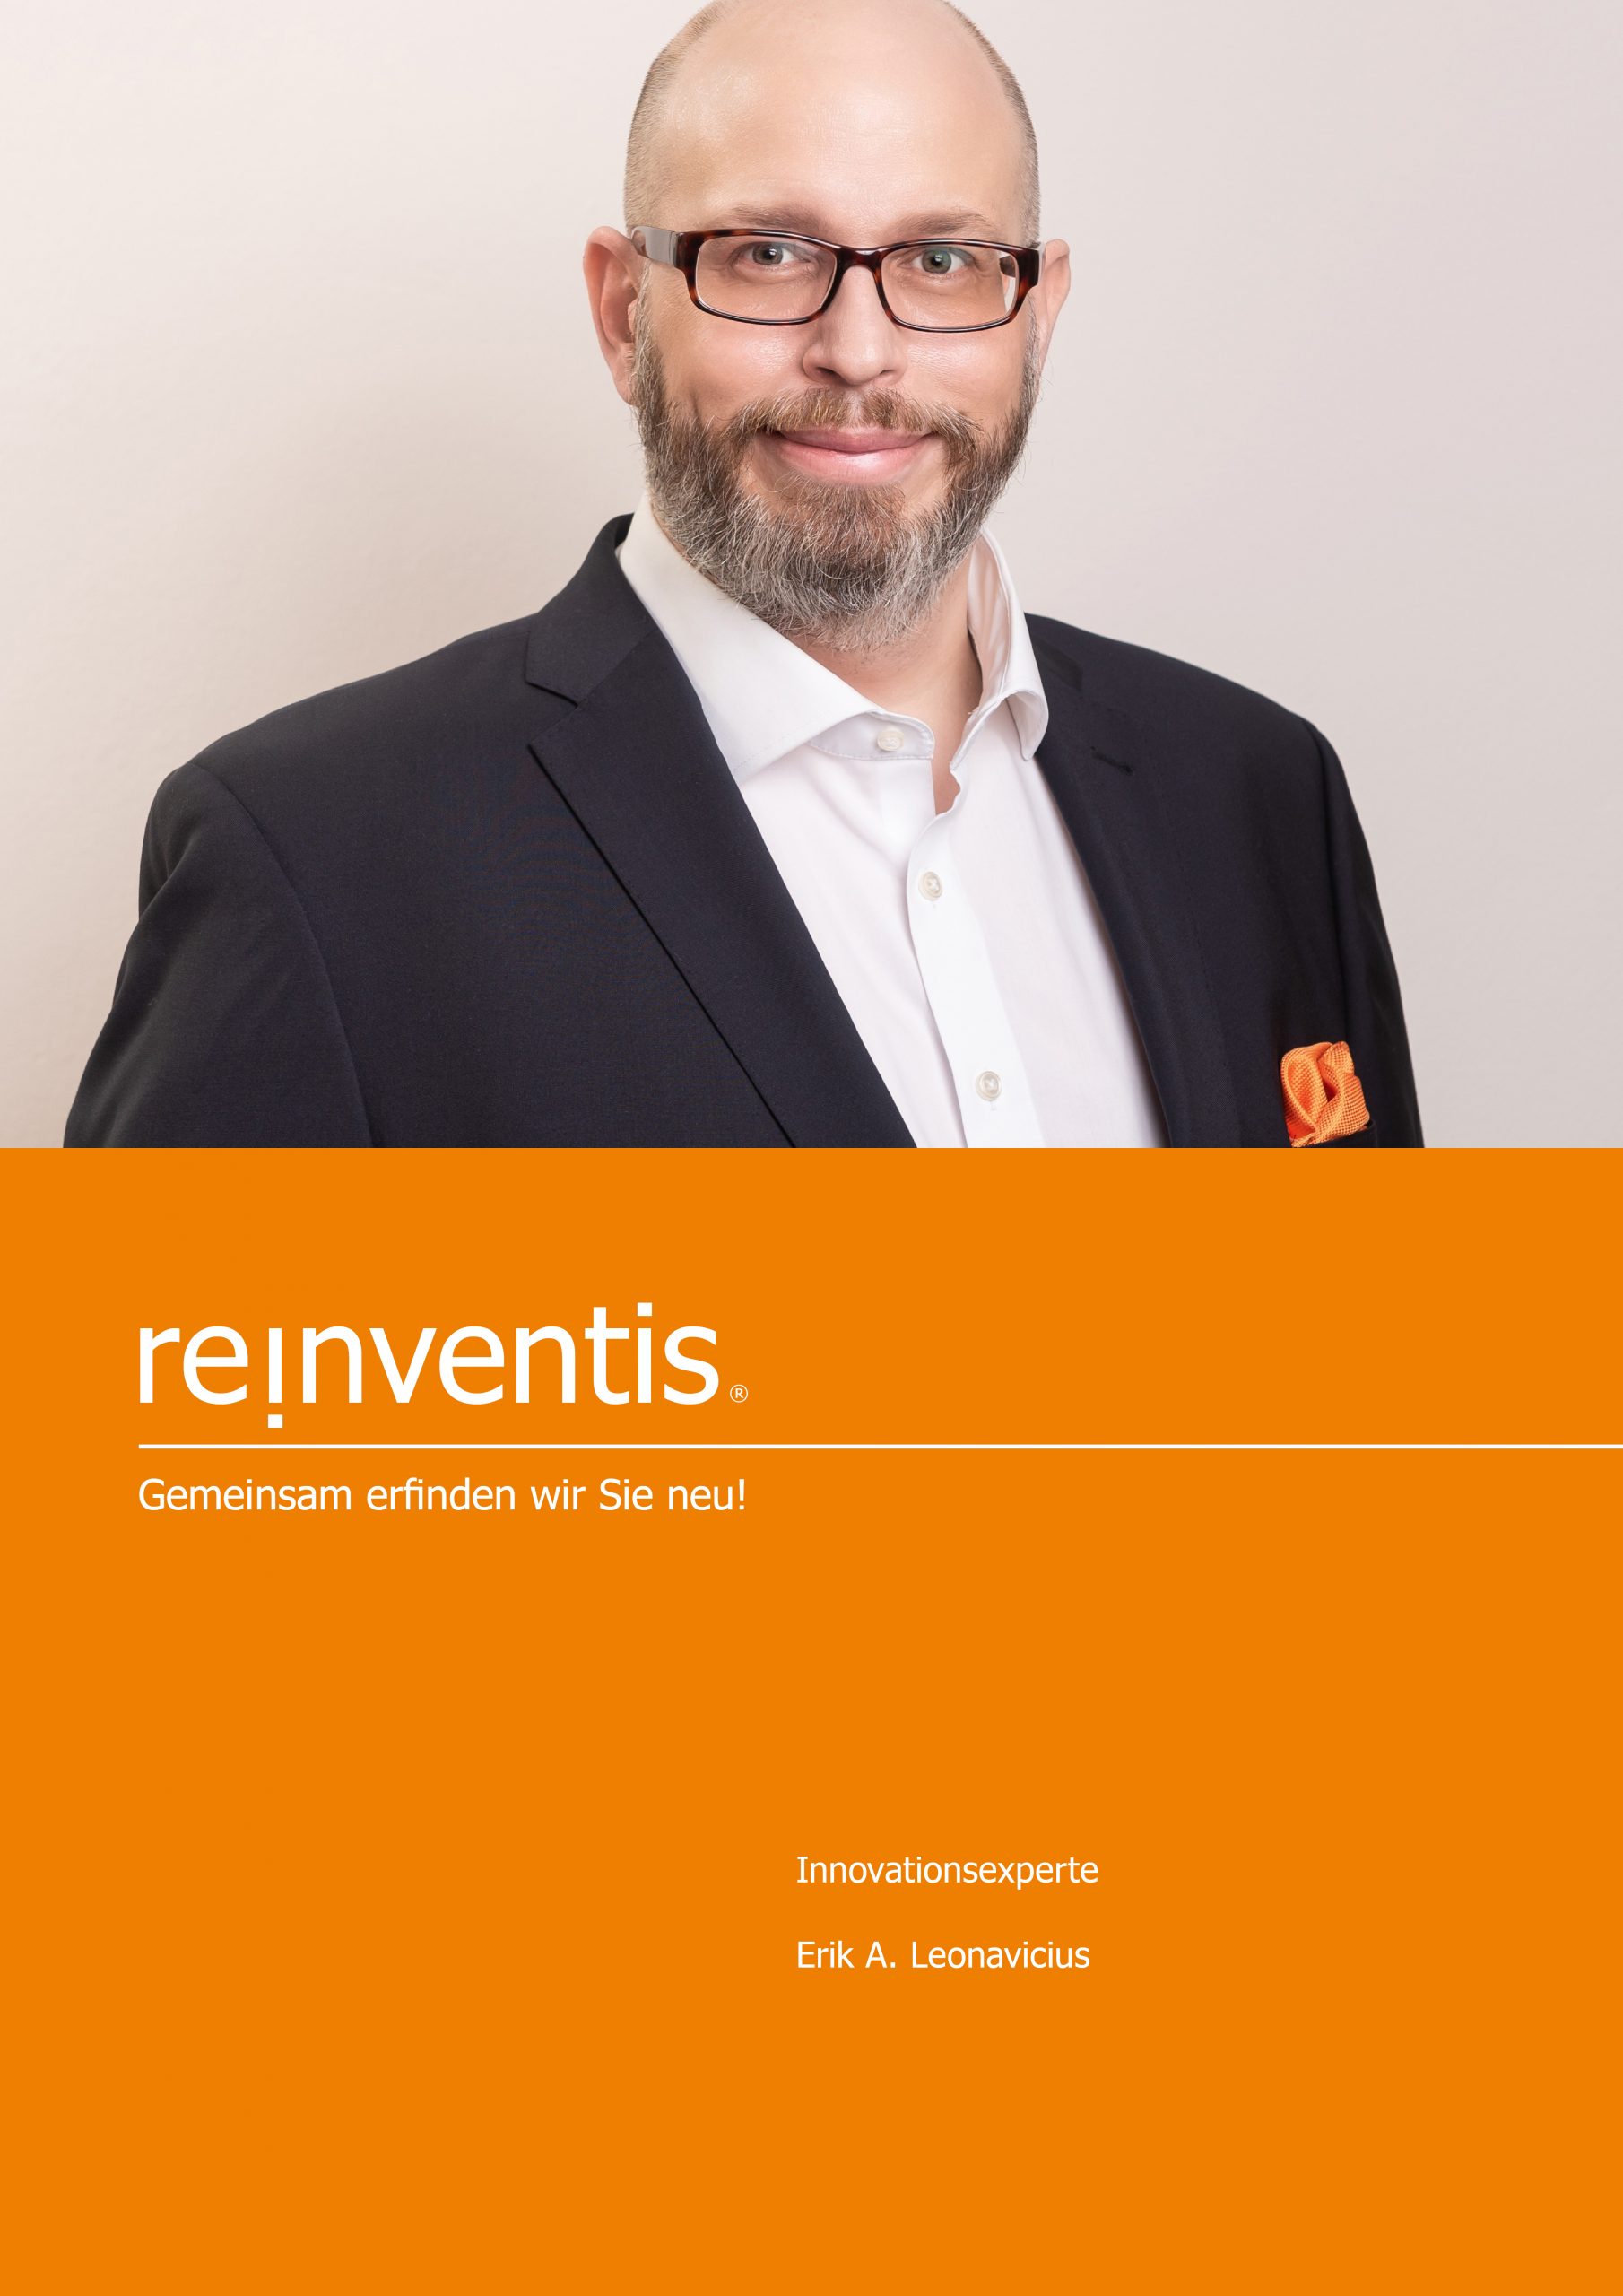 Innovation - Innovationsexperte - Erik A. Leonavicius - Innovationsberatung REINVENTIS in München